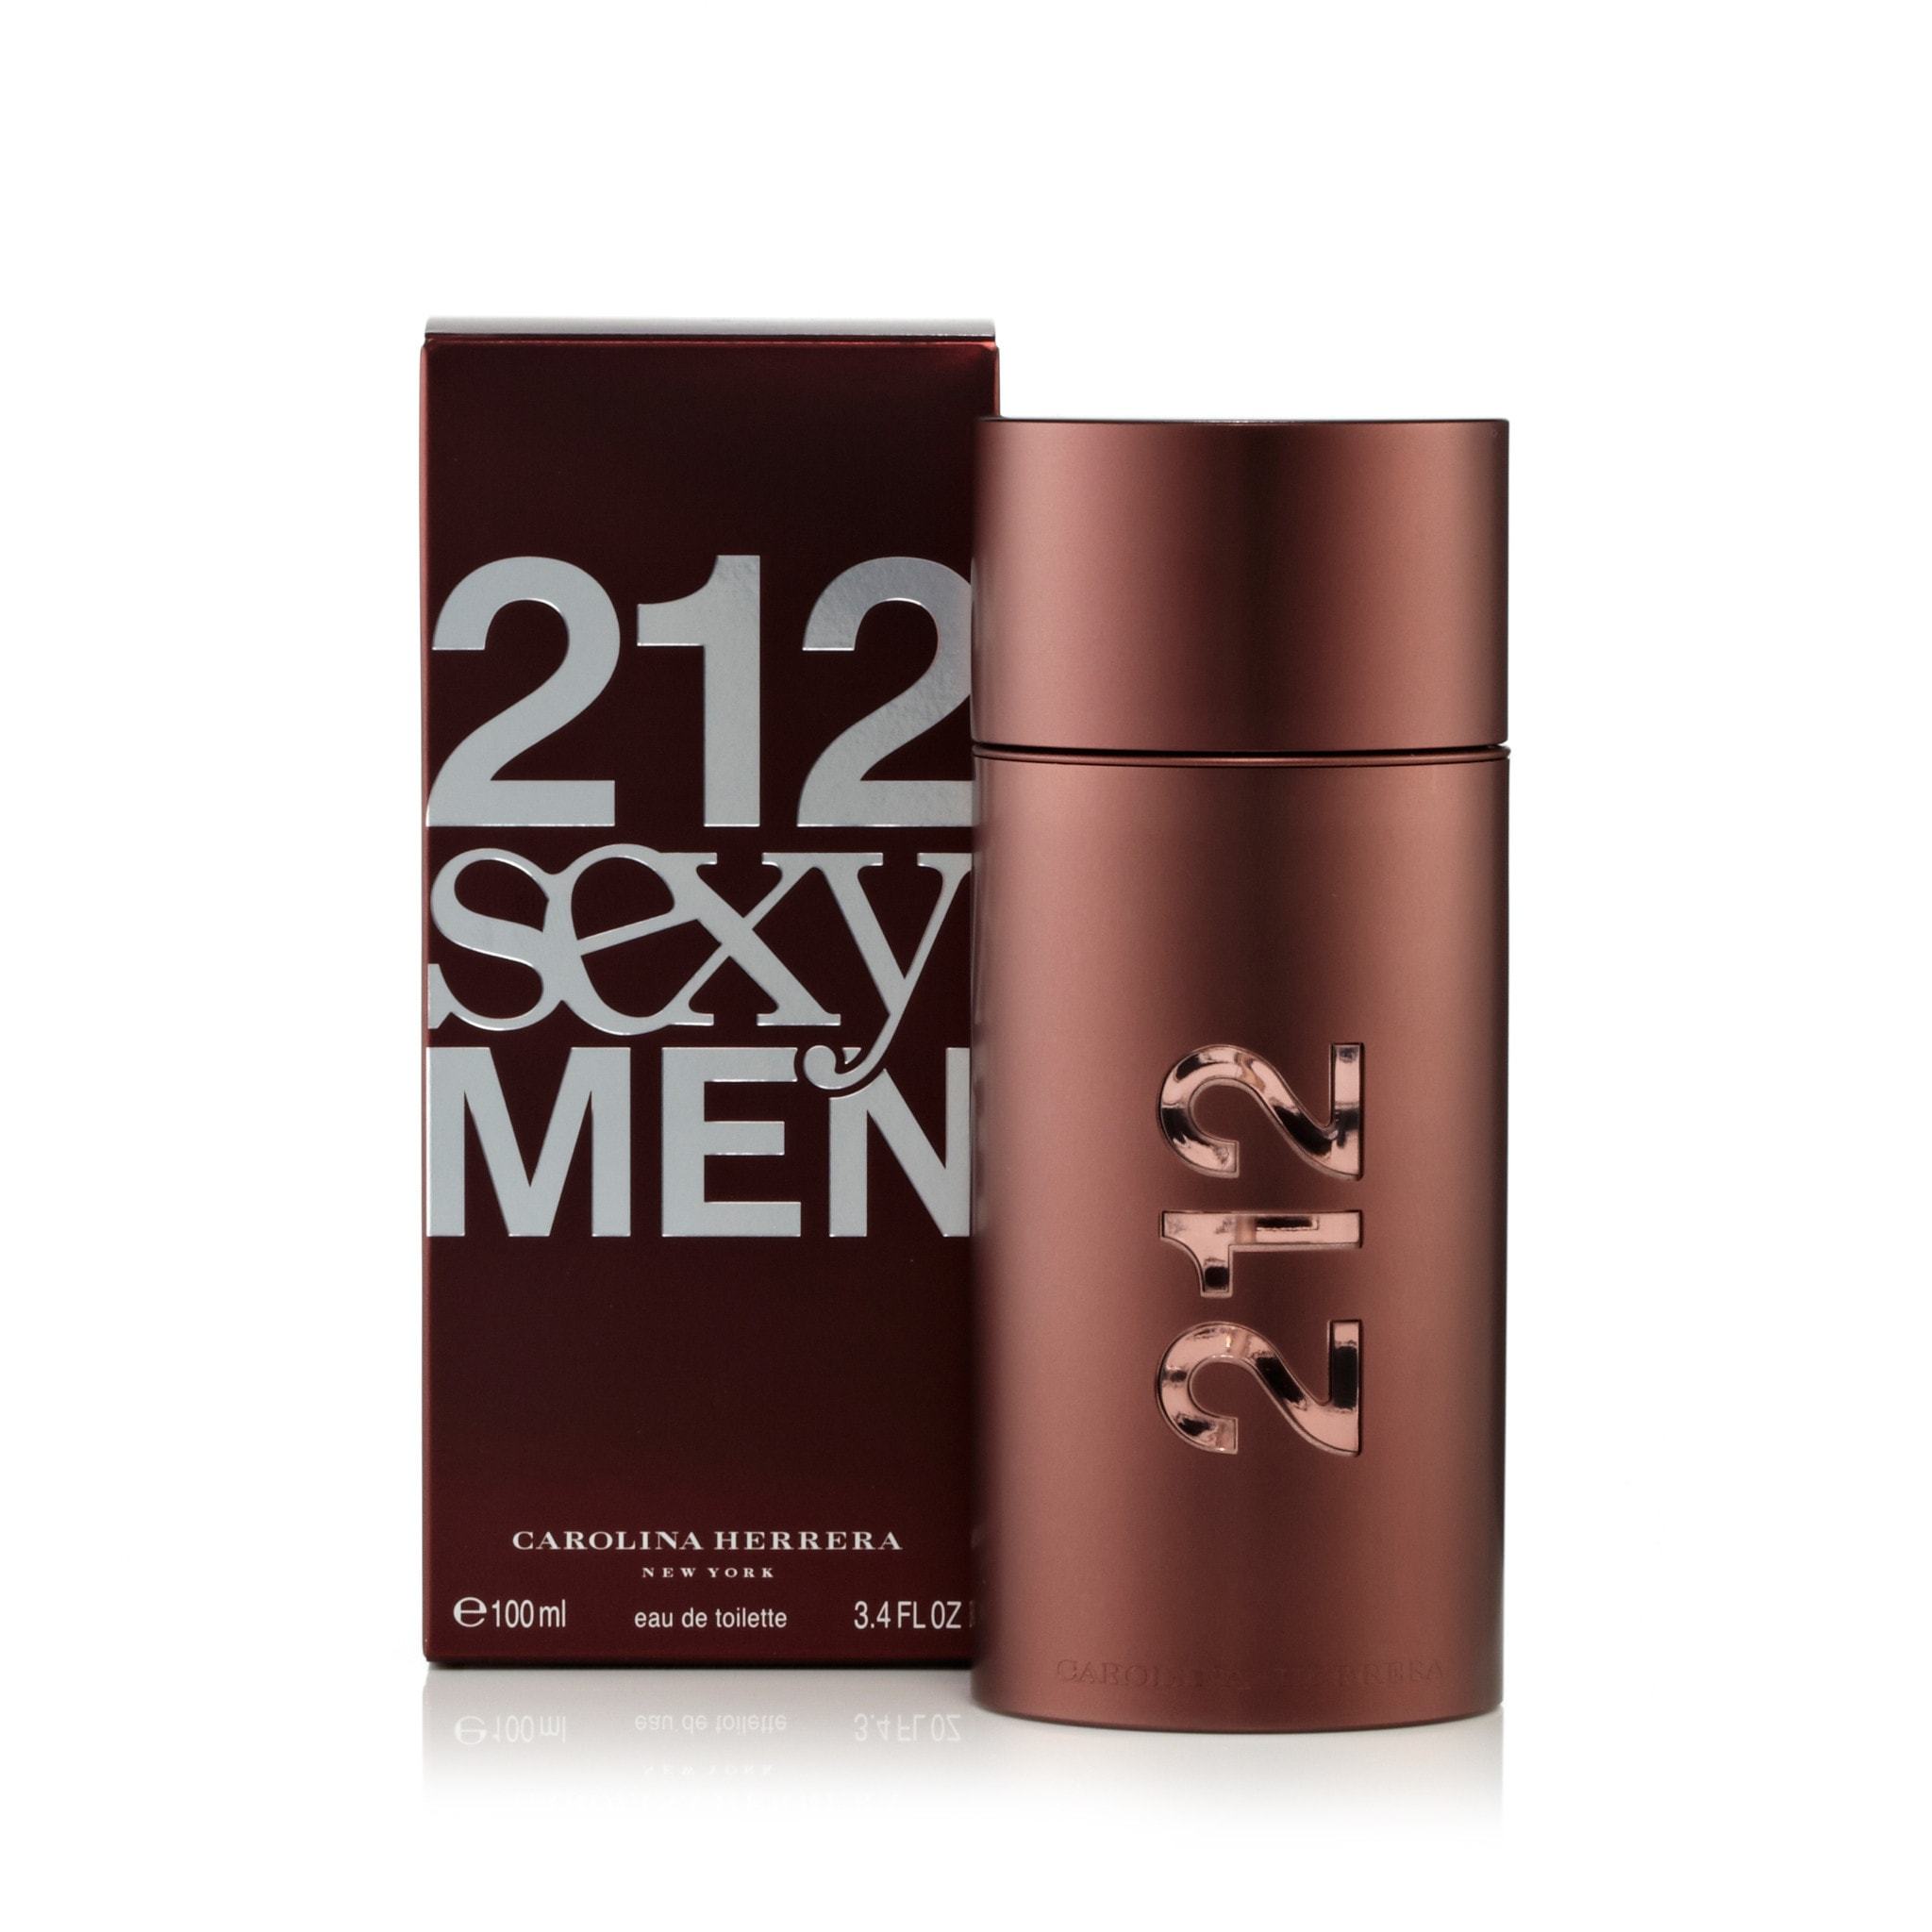 by – Outlet Herrera for EDT Fragrance 212 Men Men Sexy Carolina